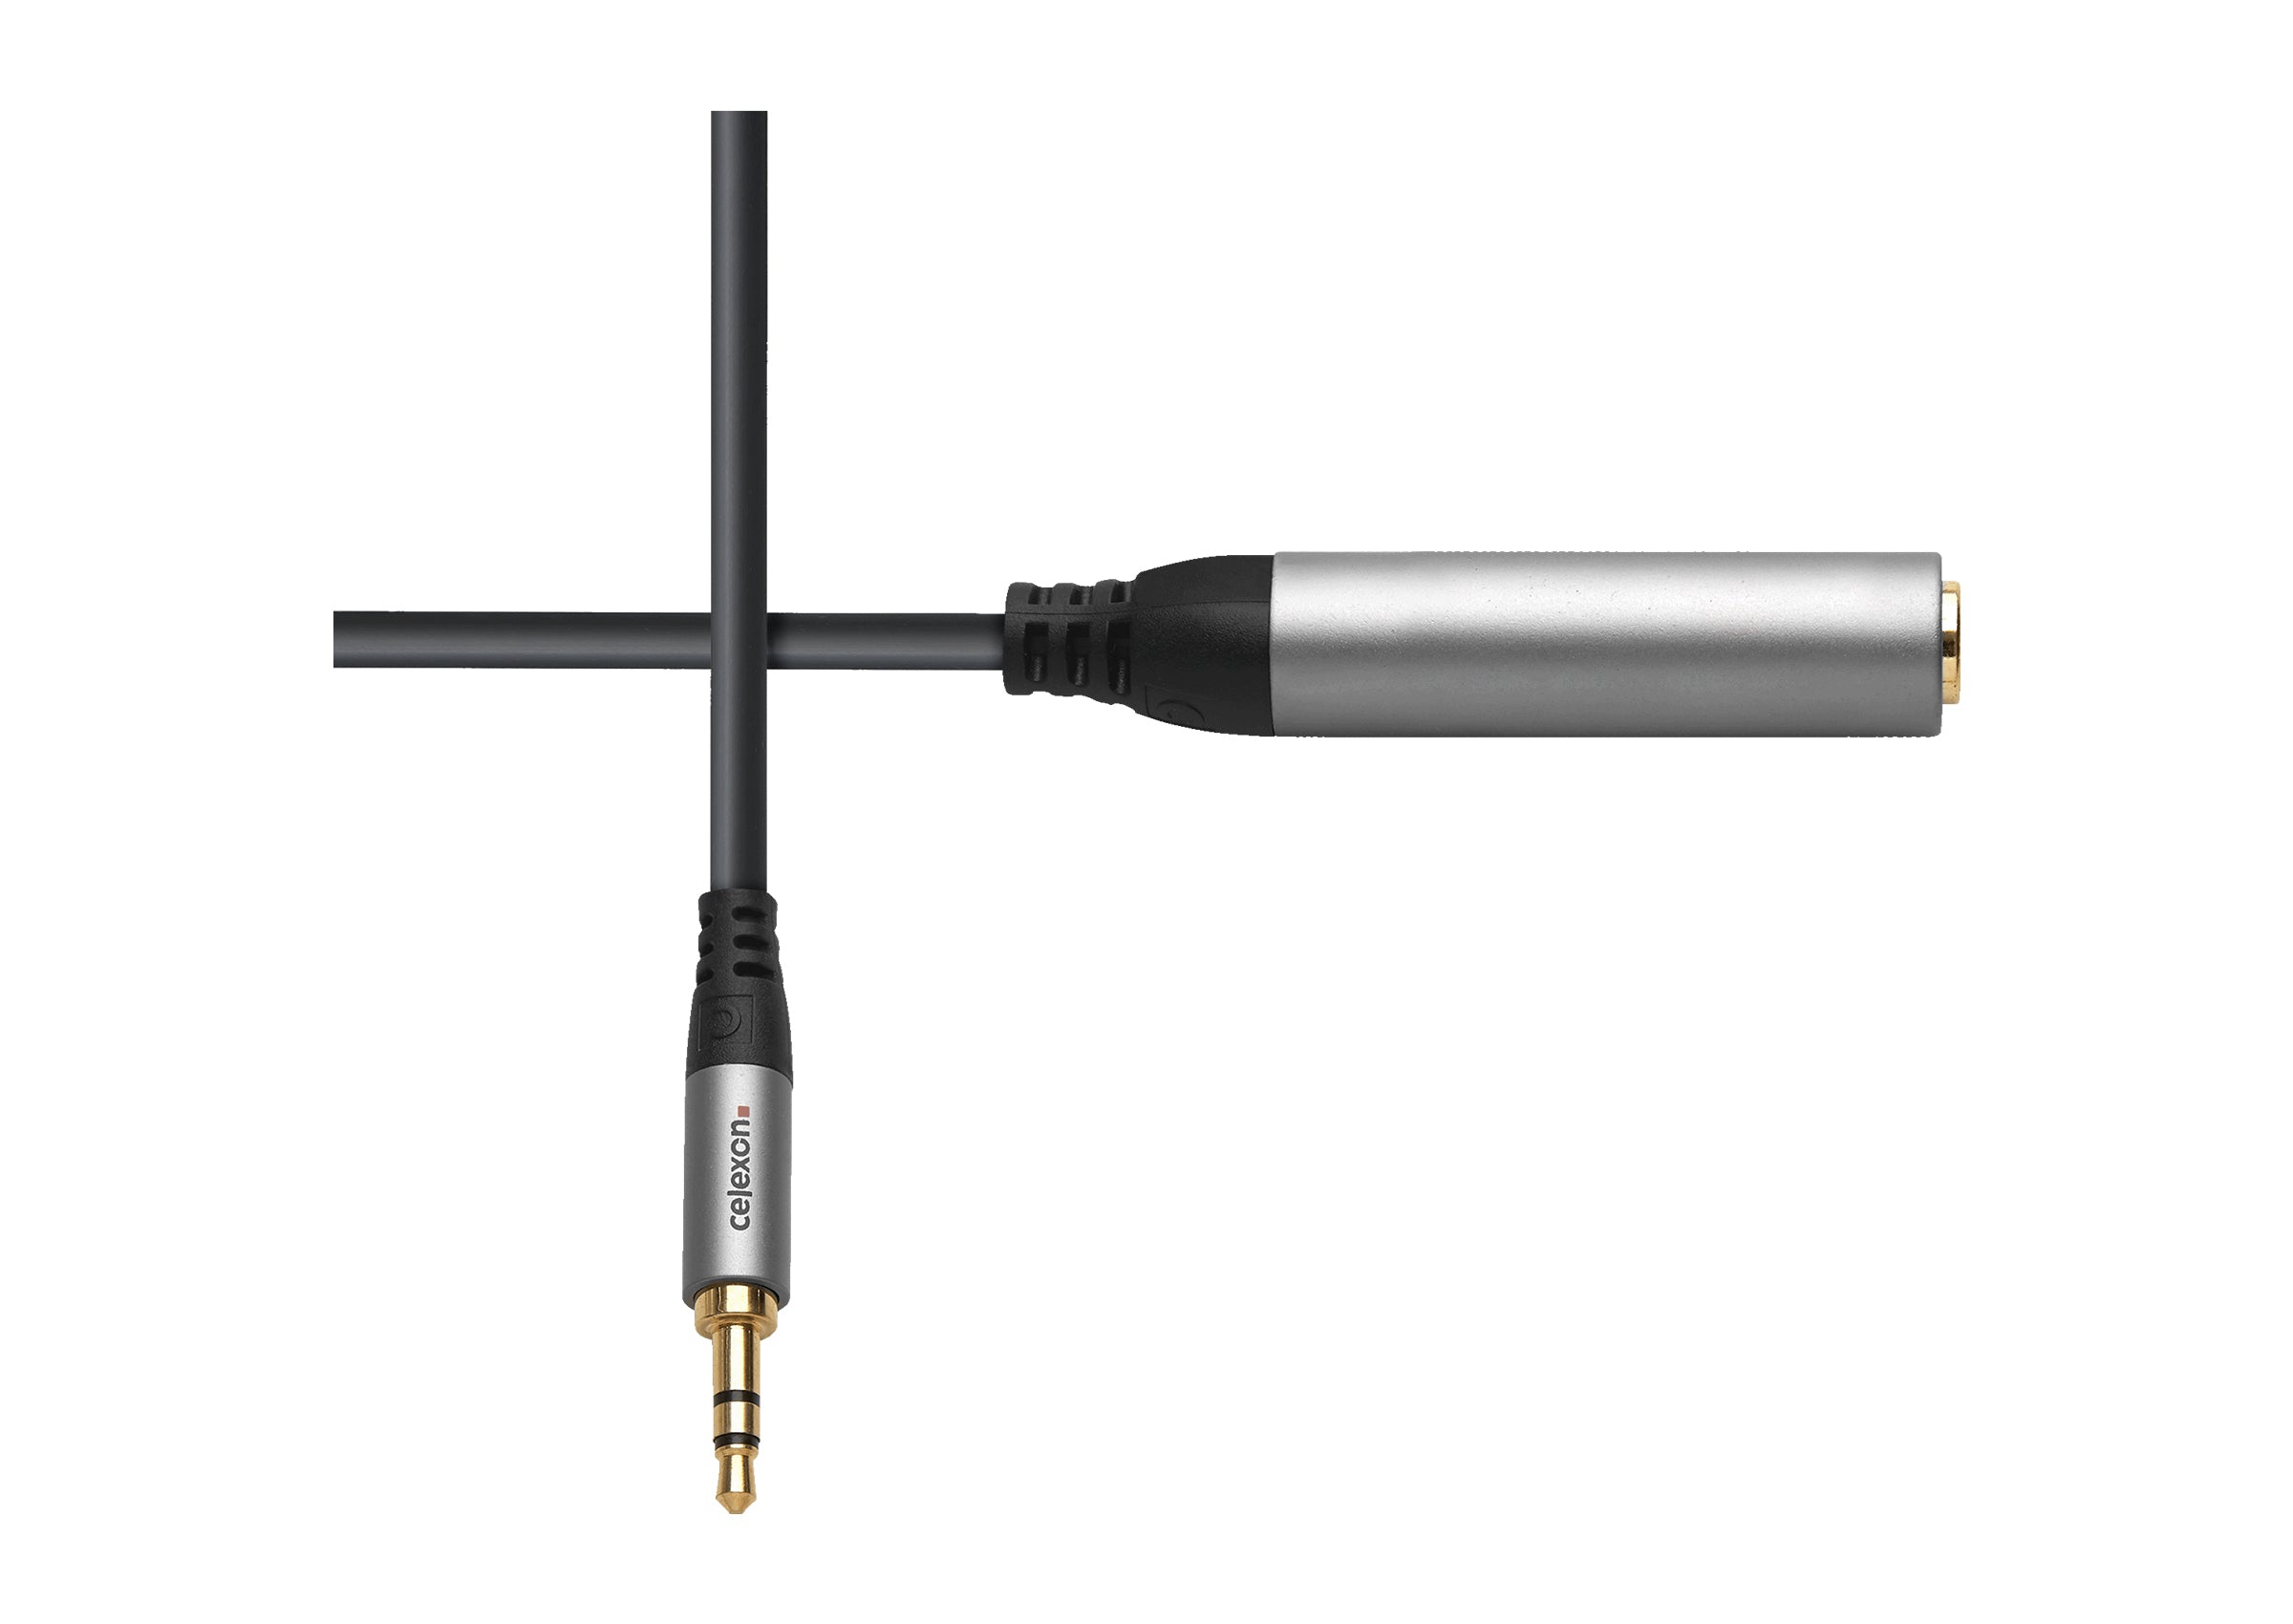 celexon 3,5mm Stereo Klinke auf 6,3mm Stereo Klinke M/F Audioadapter 0,25m - Professional Line